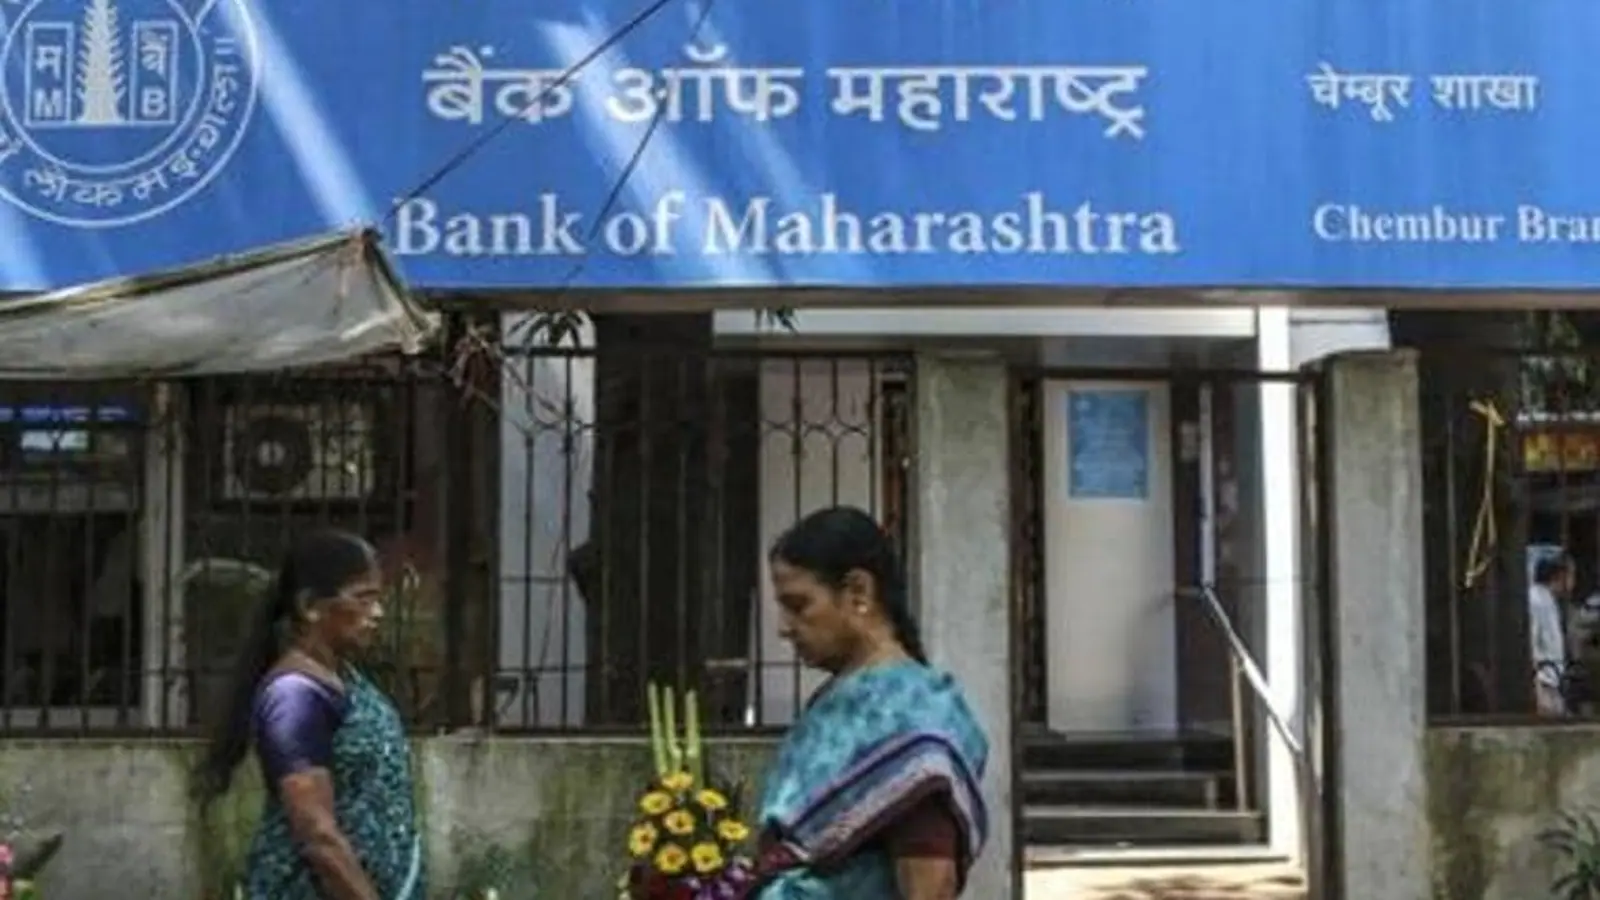 Bank of Maharashtra Generalist Officer Result 2022 declared, direct link here